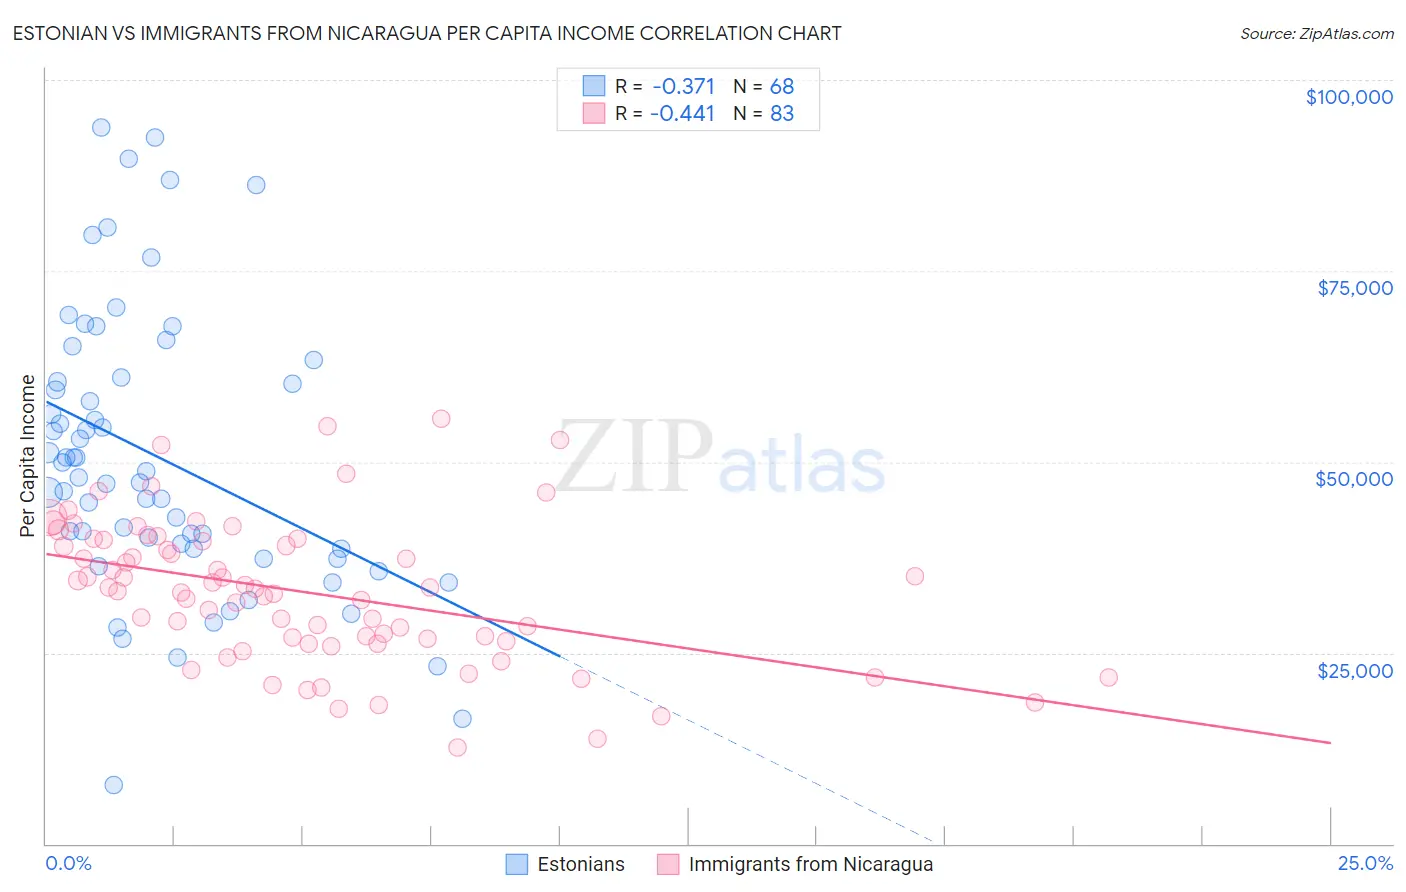 Estonian vs Immigrants from Nicaragua Per Capita Income